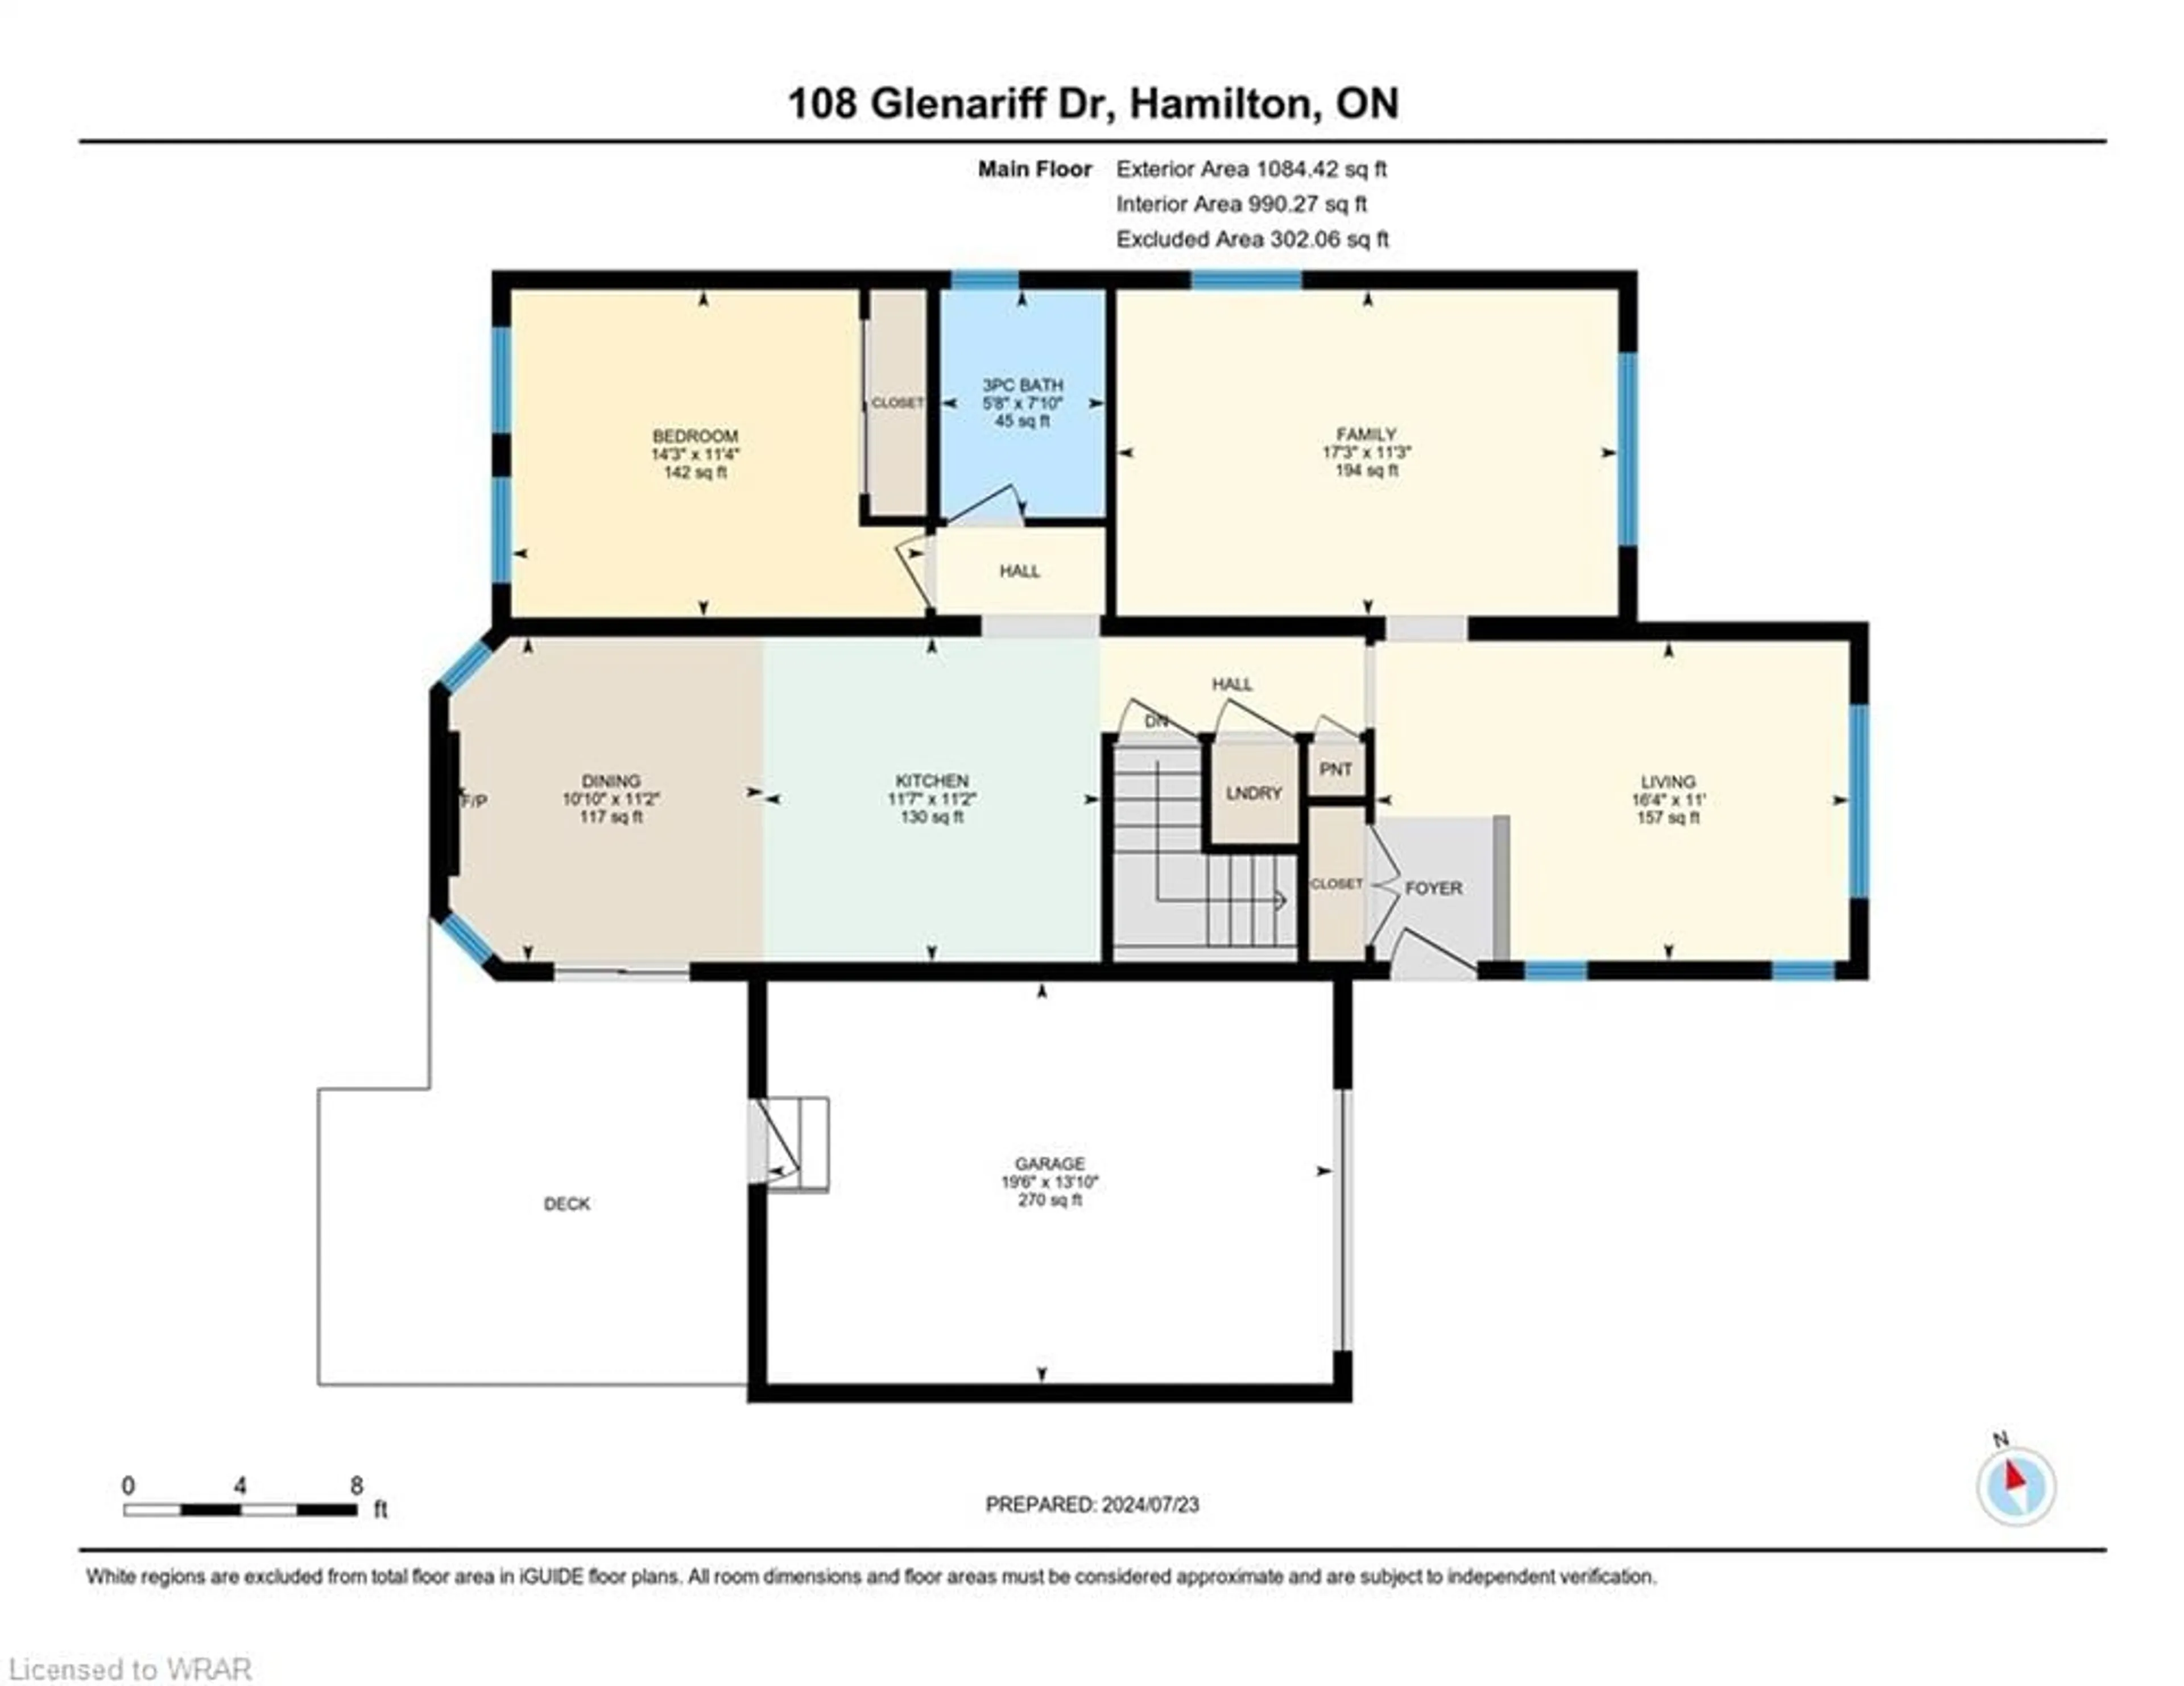 Floor plan for 108 Glenariff Dr, Freelton Ontario L8B 1A5